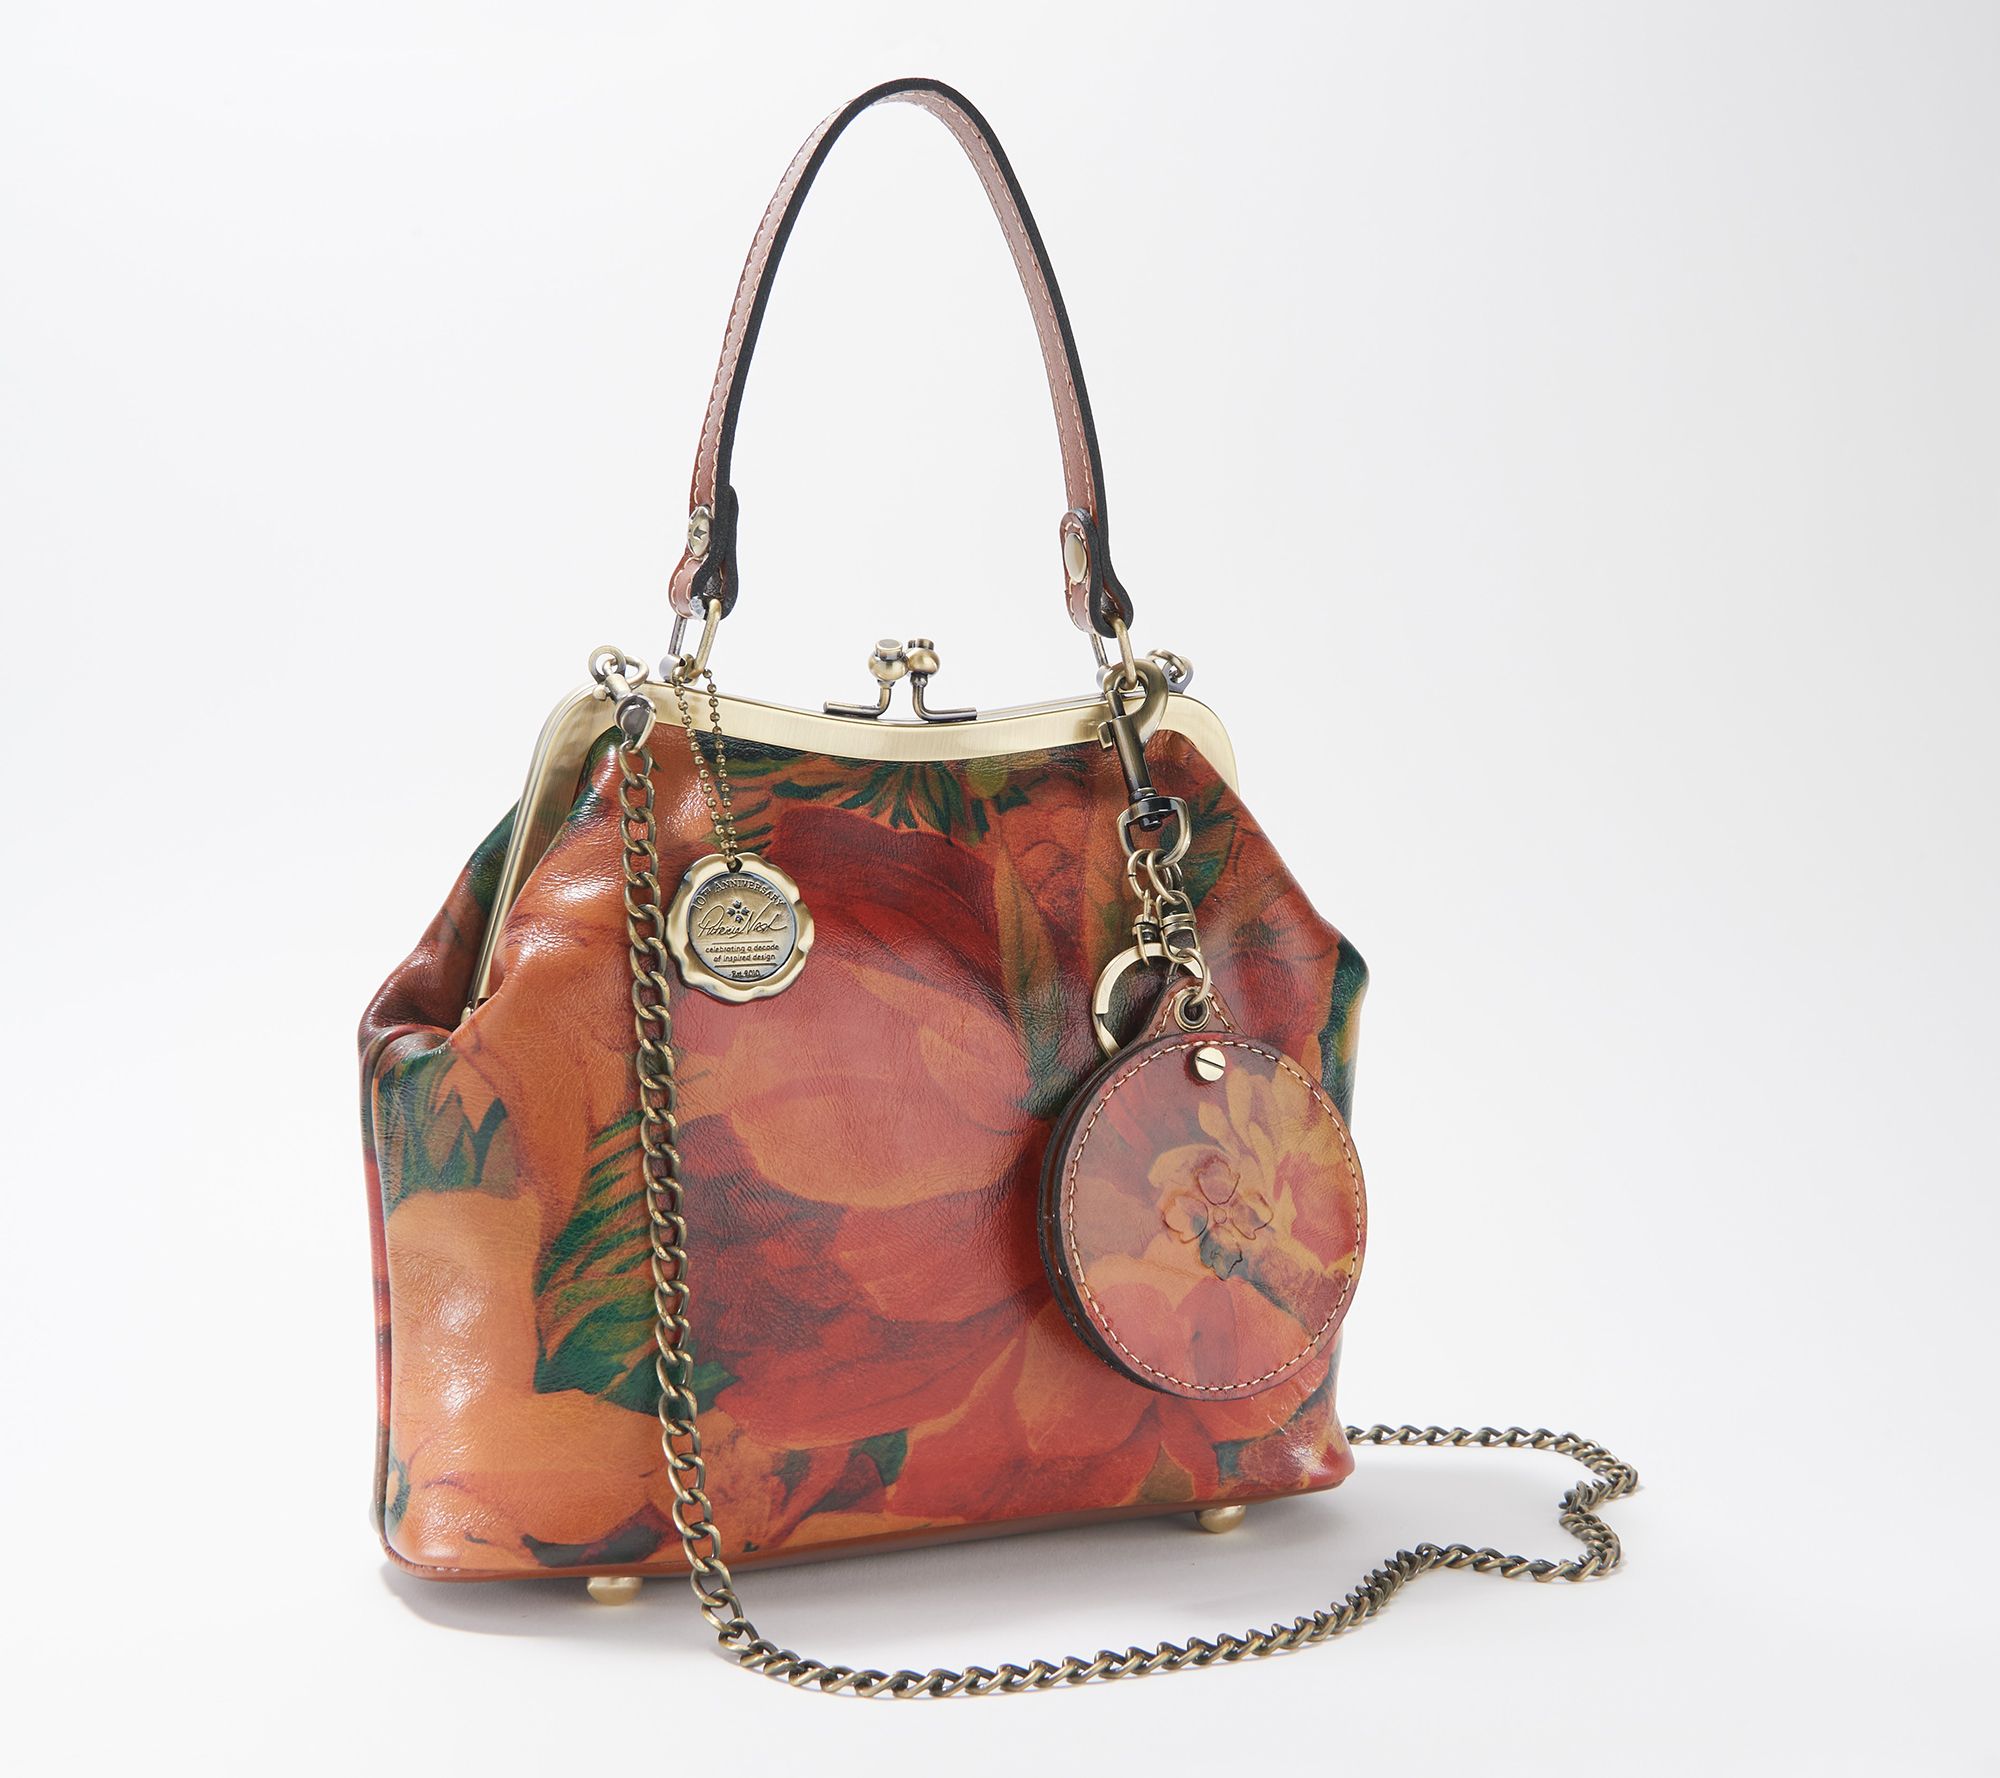 Qvc Shopping Online Patricia Nash Handbags | IQS Executive